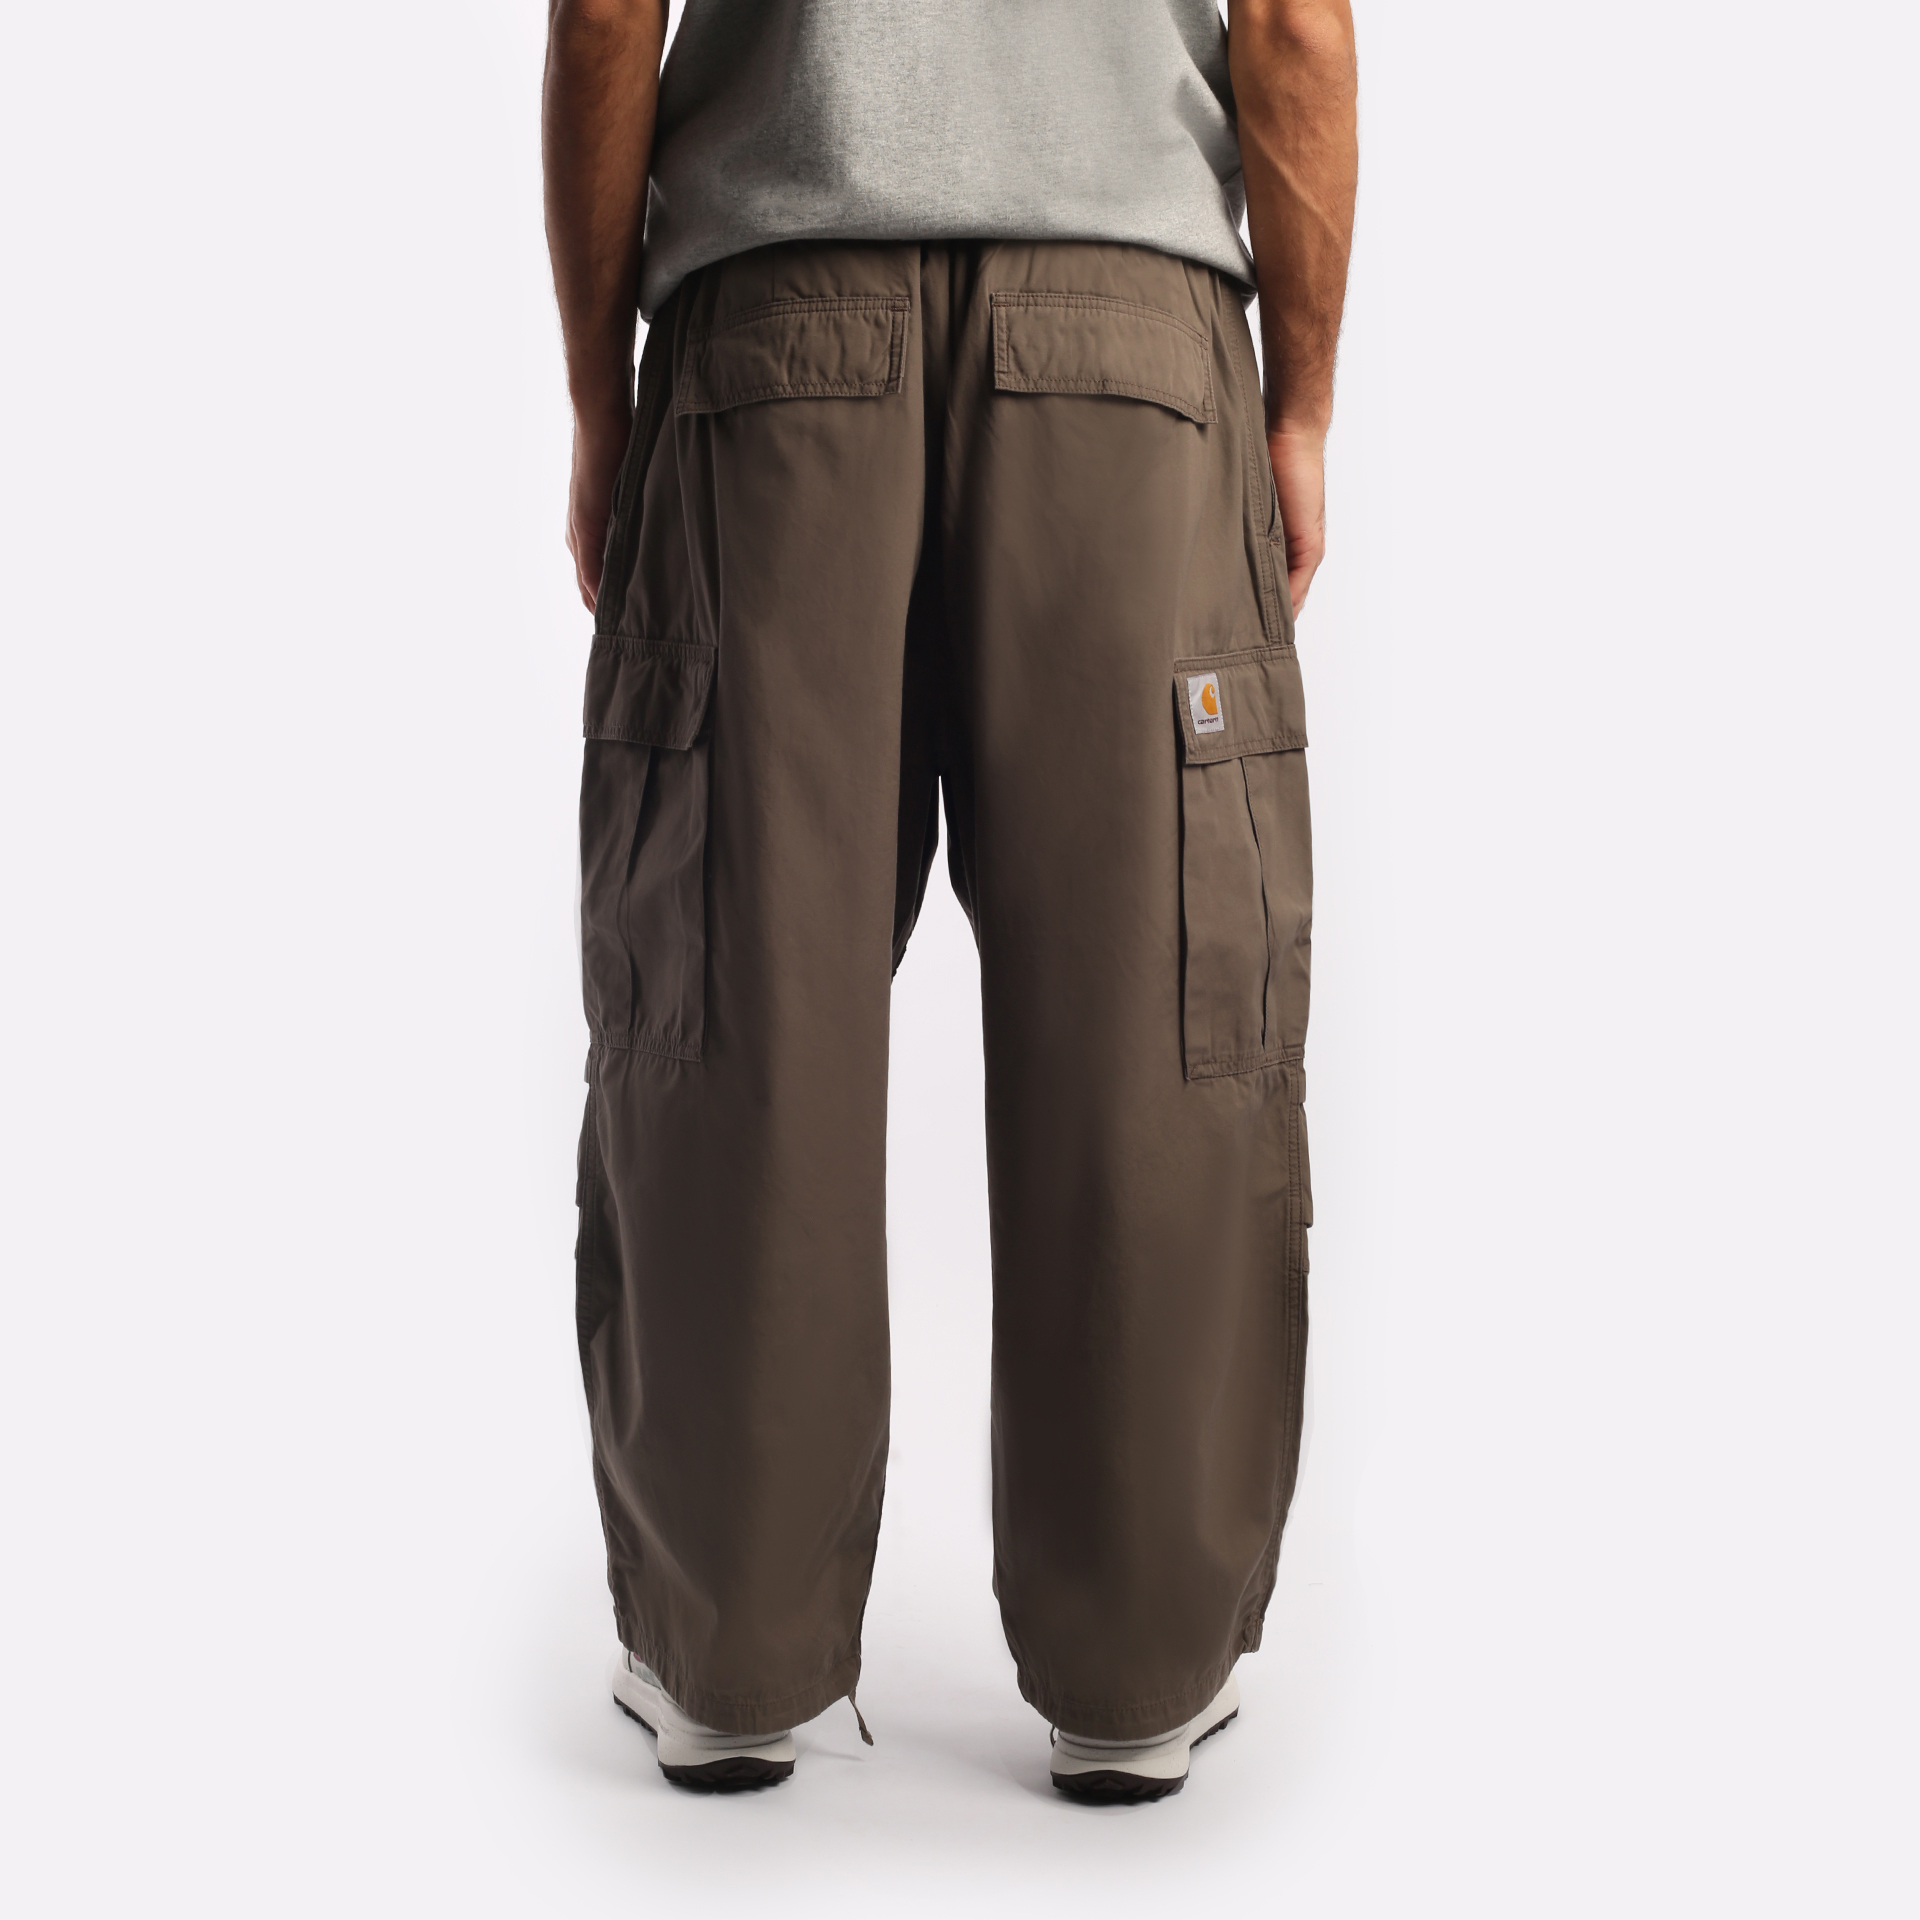 мужские коричневые брюки Carhartt WIP Jet I031520-barista - цена, описание, фото 2